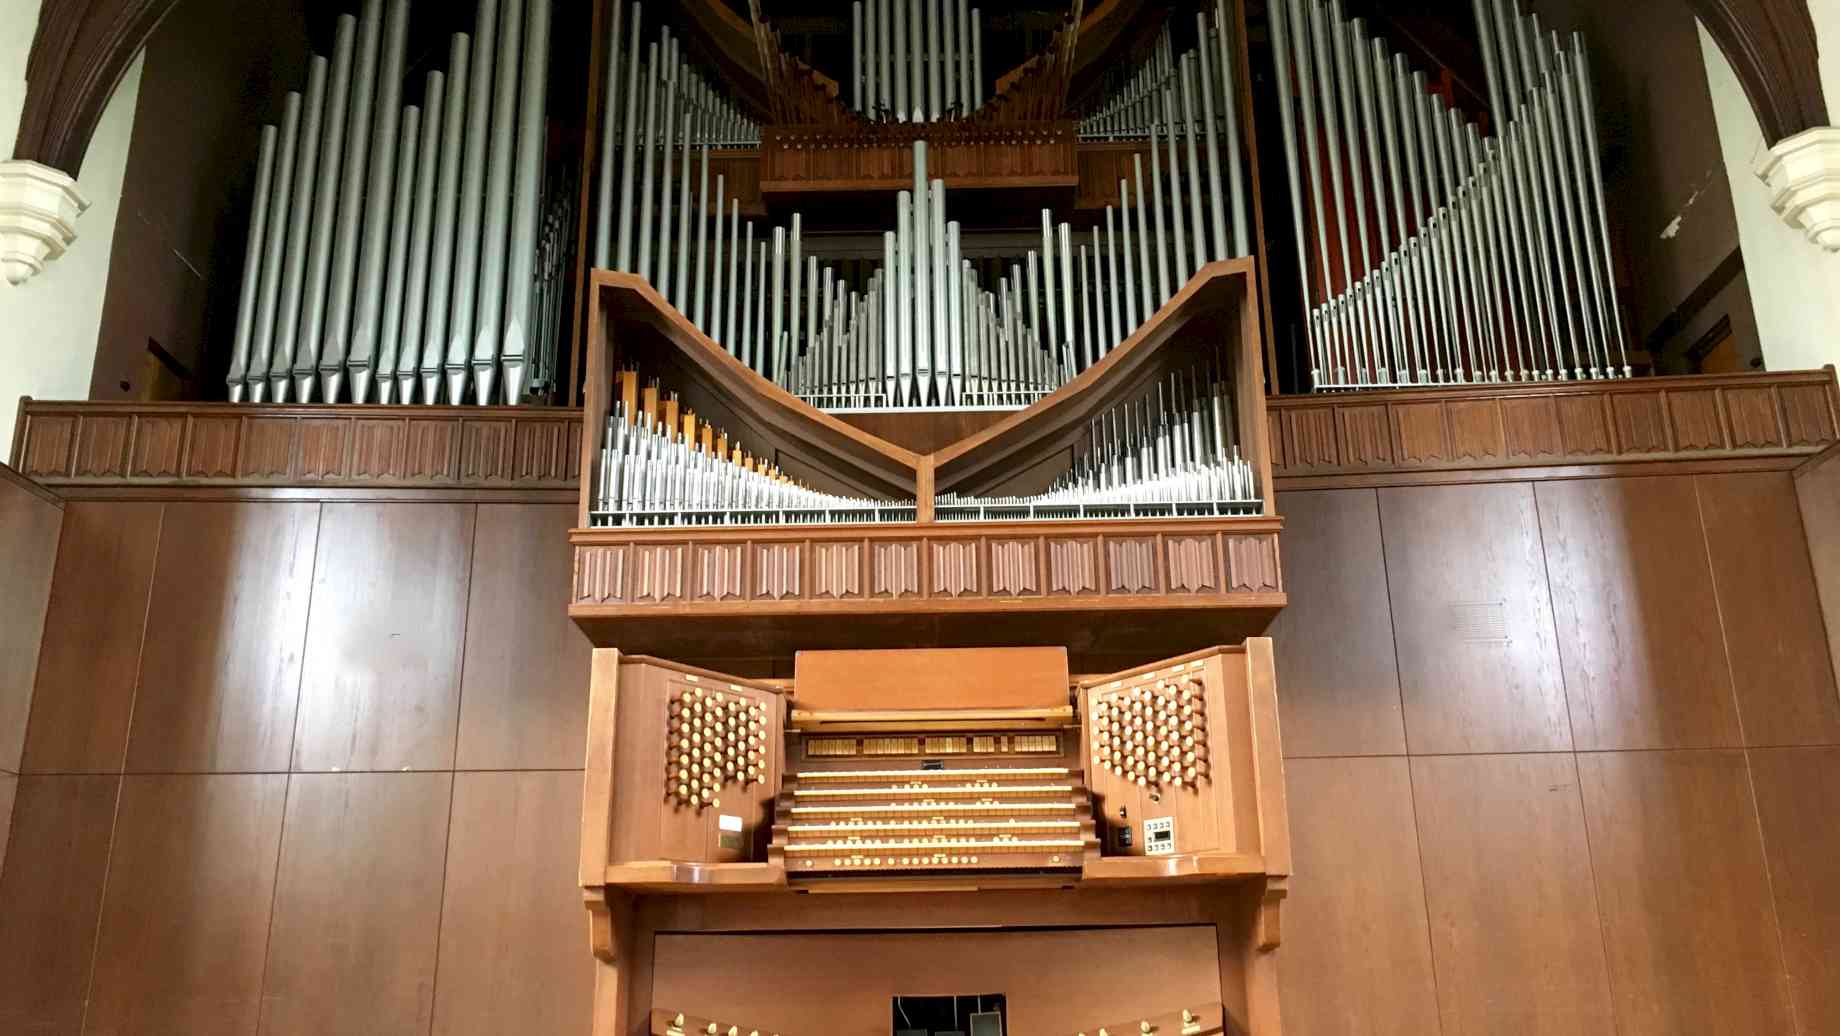 University Auditorium Organ with Console